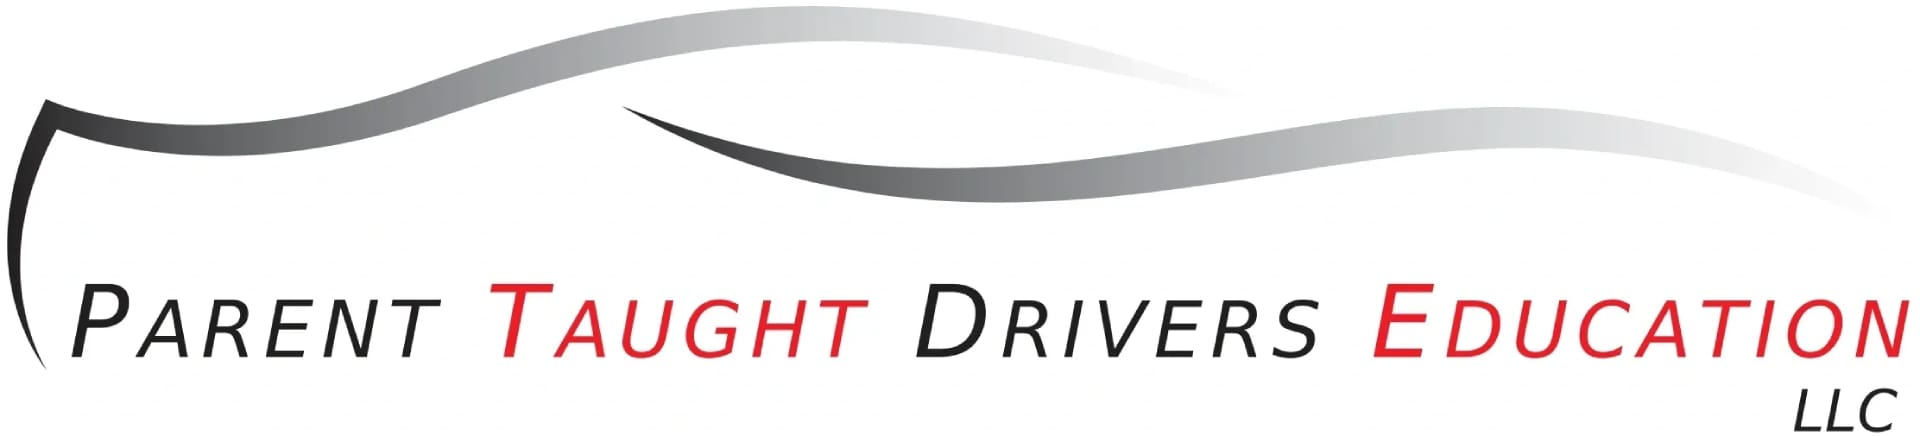 A logo of the company night drive